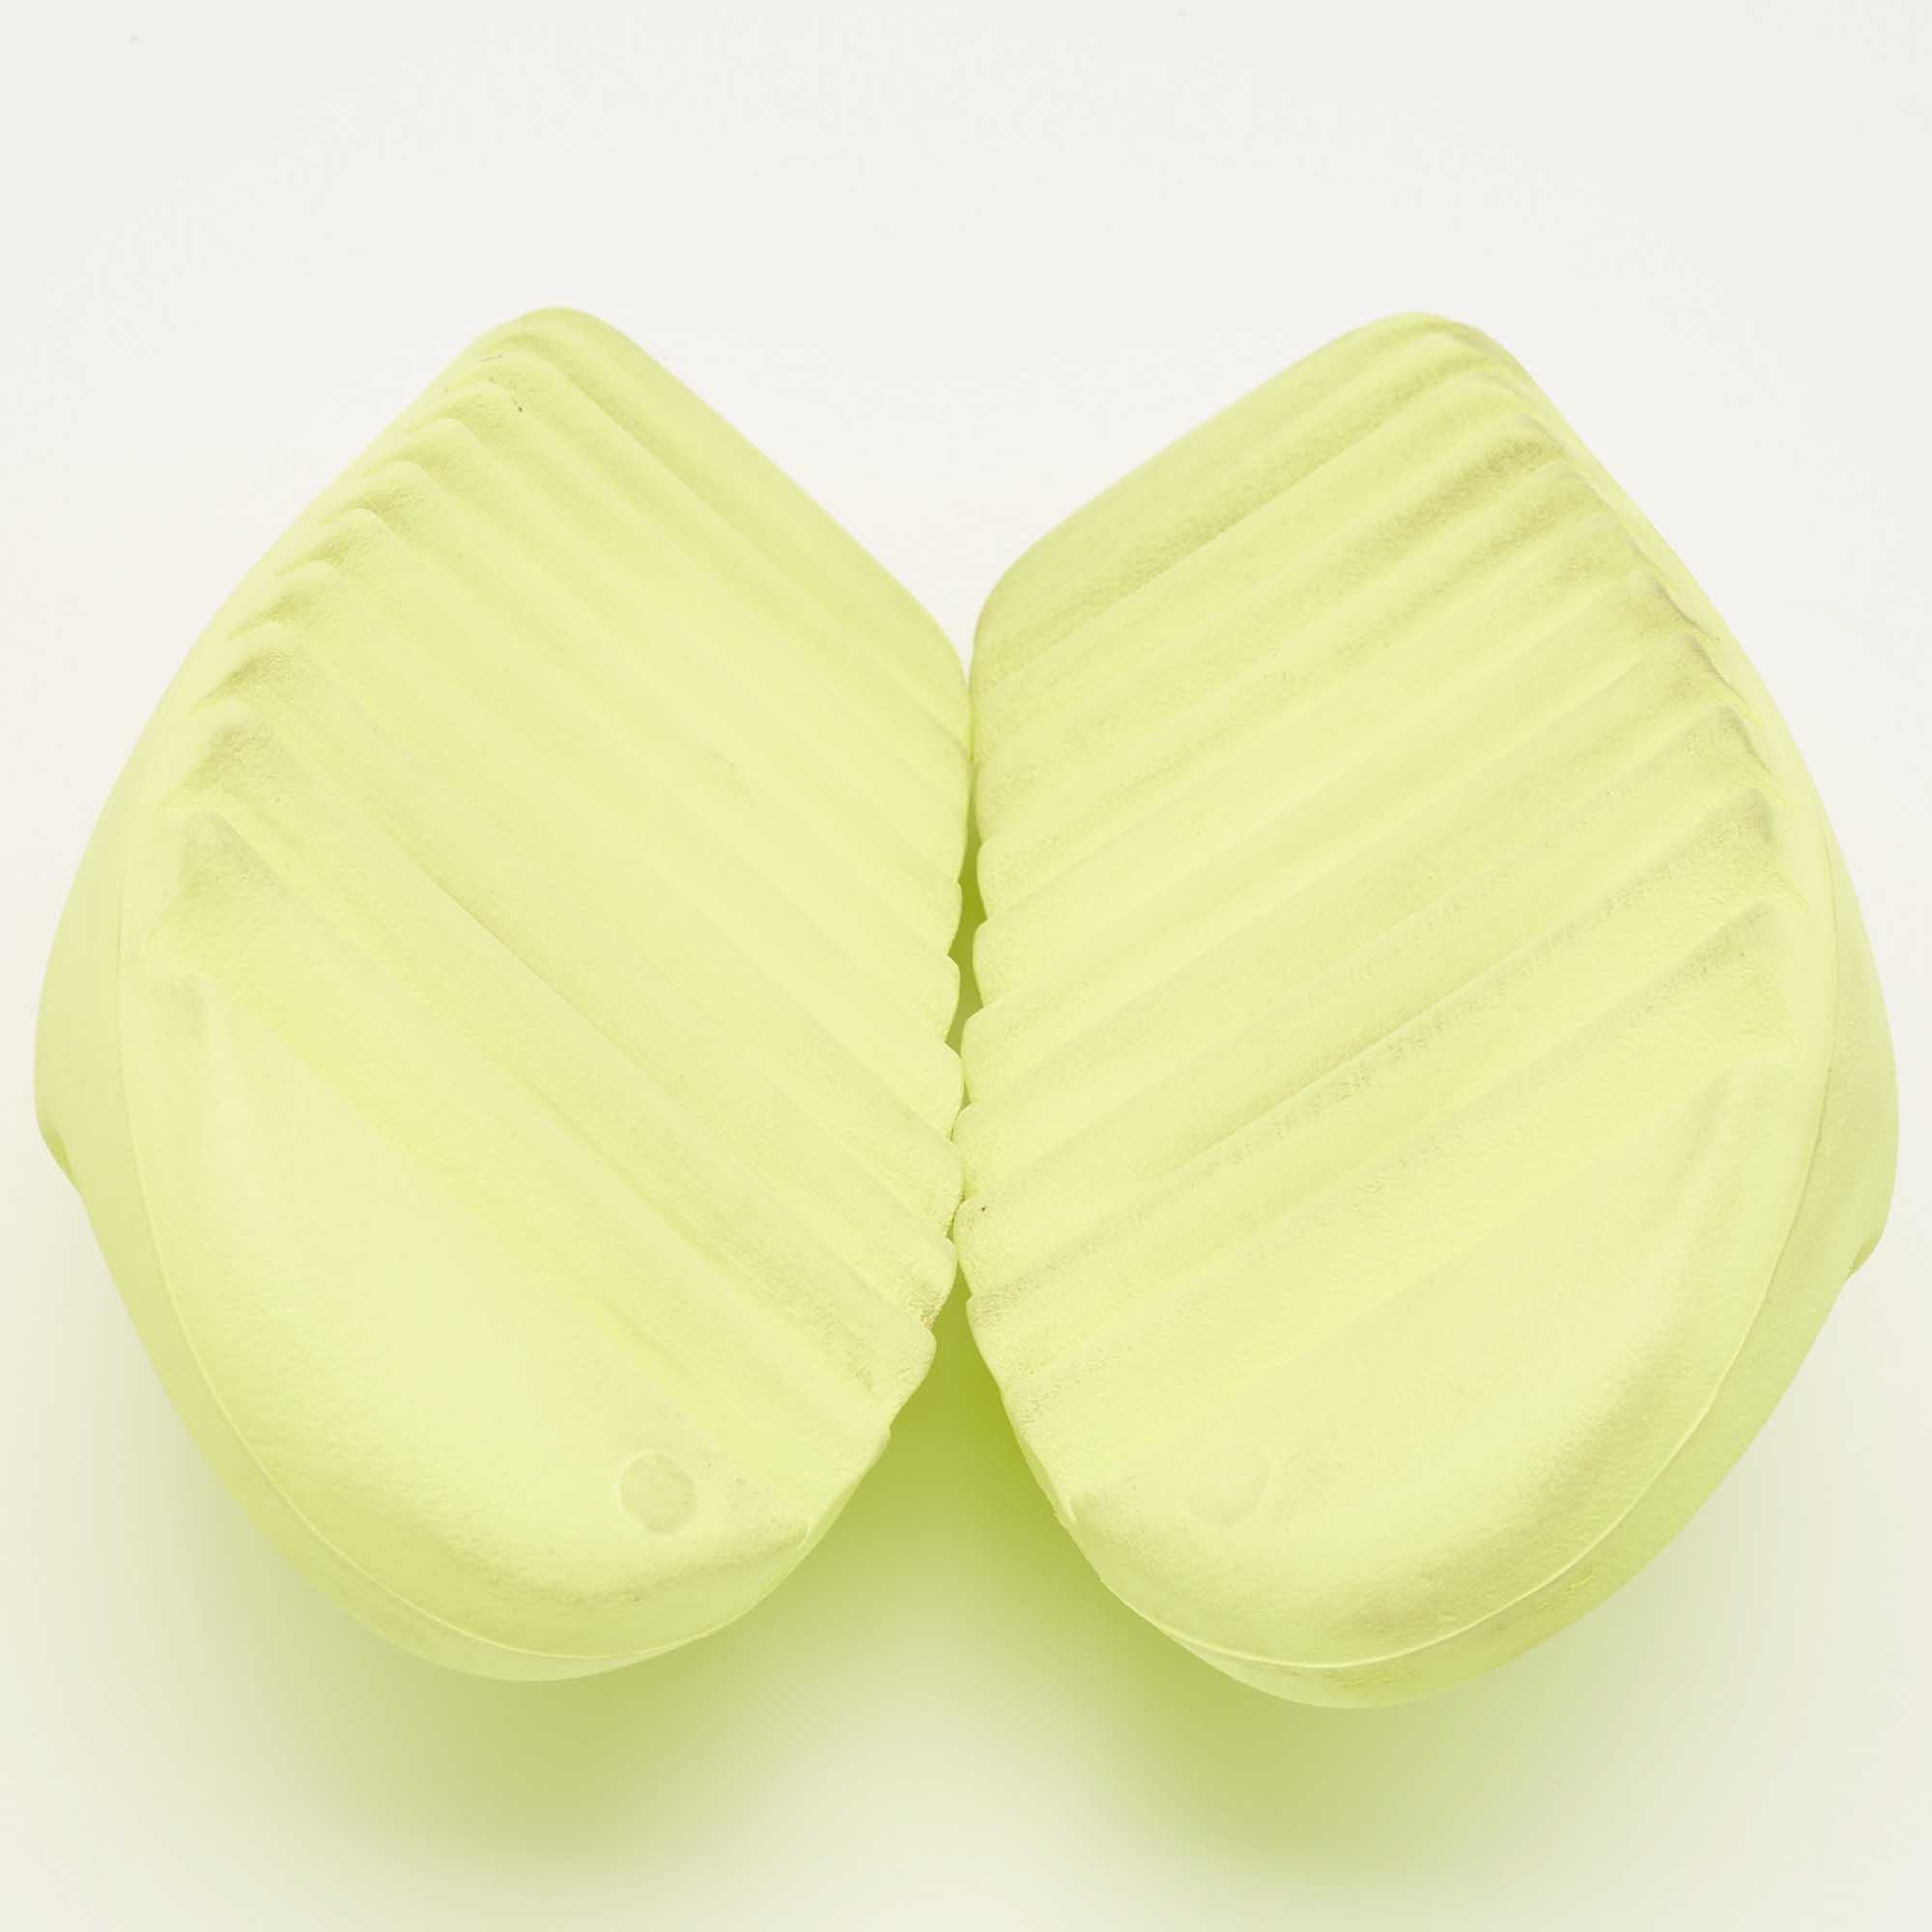 Yeezy X Adidas Neon Green Rubber Glow Green Slides Size 44 1/2